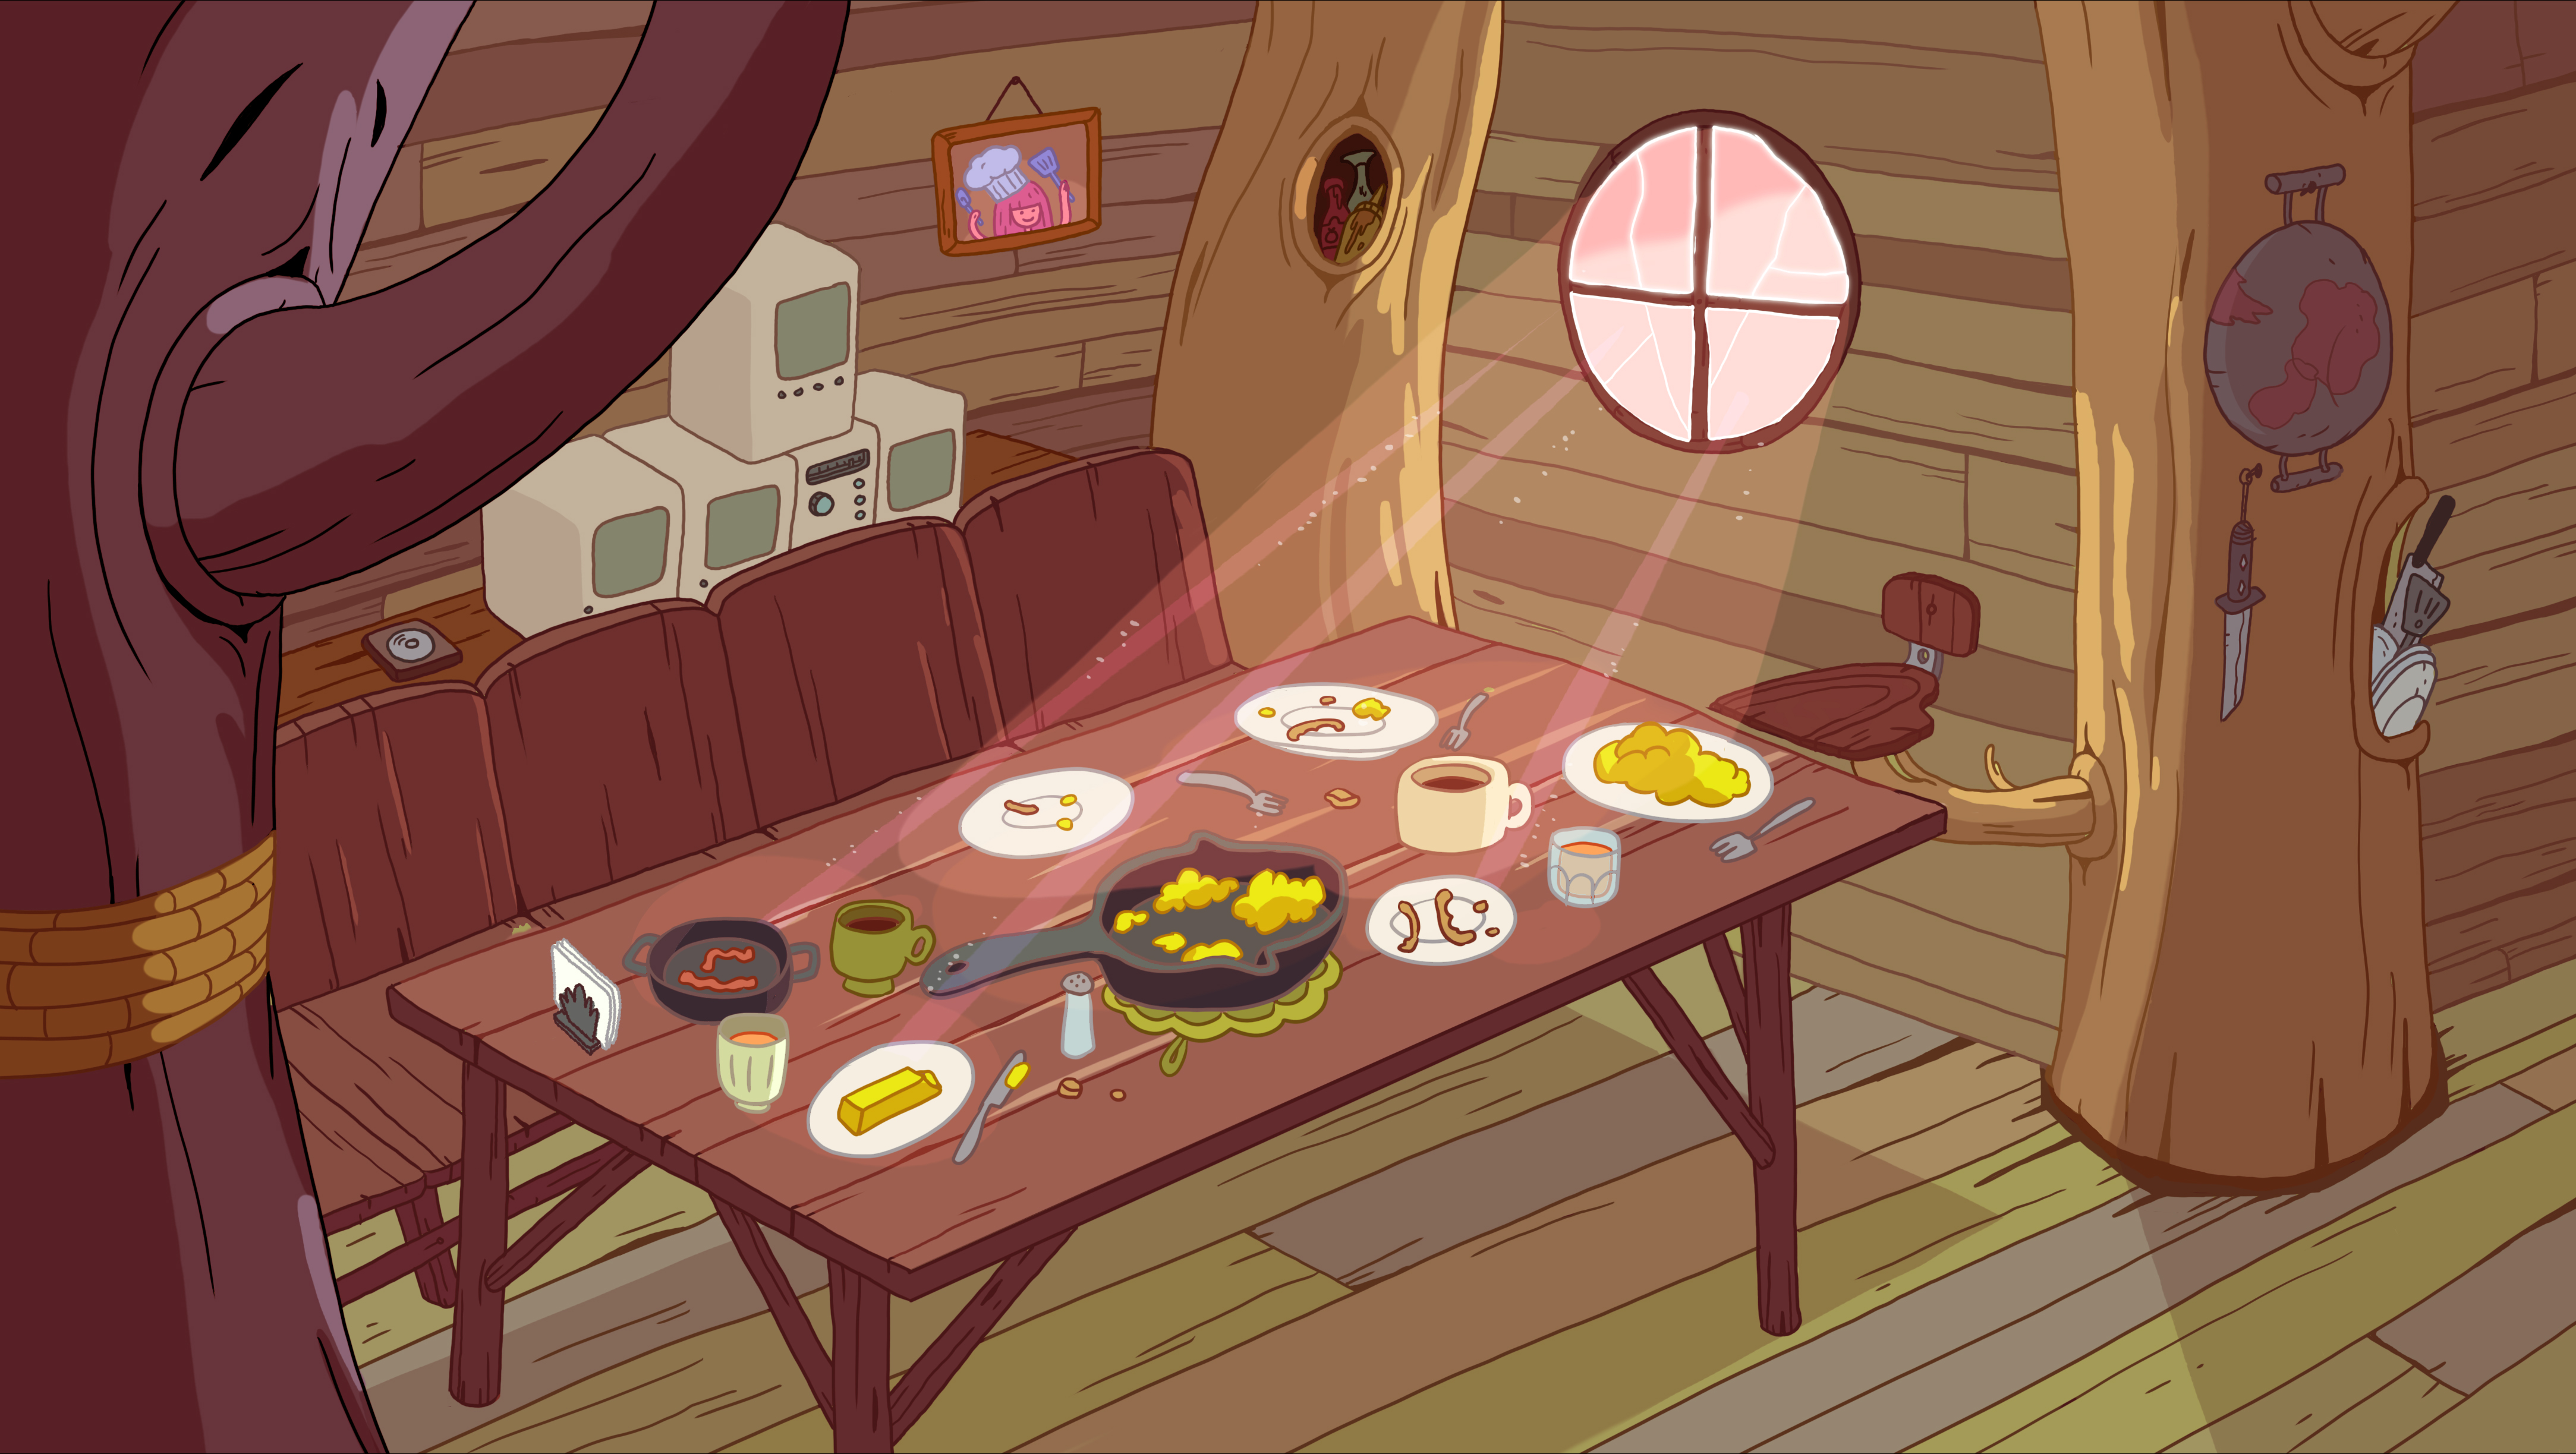 Adventure Time, breakfast, Princess Bubblegum - desktop wallpaper